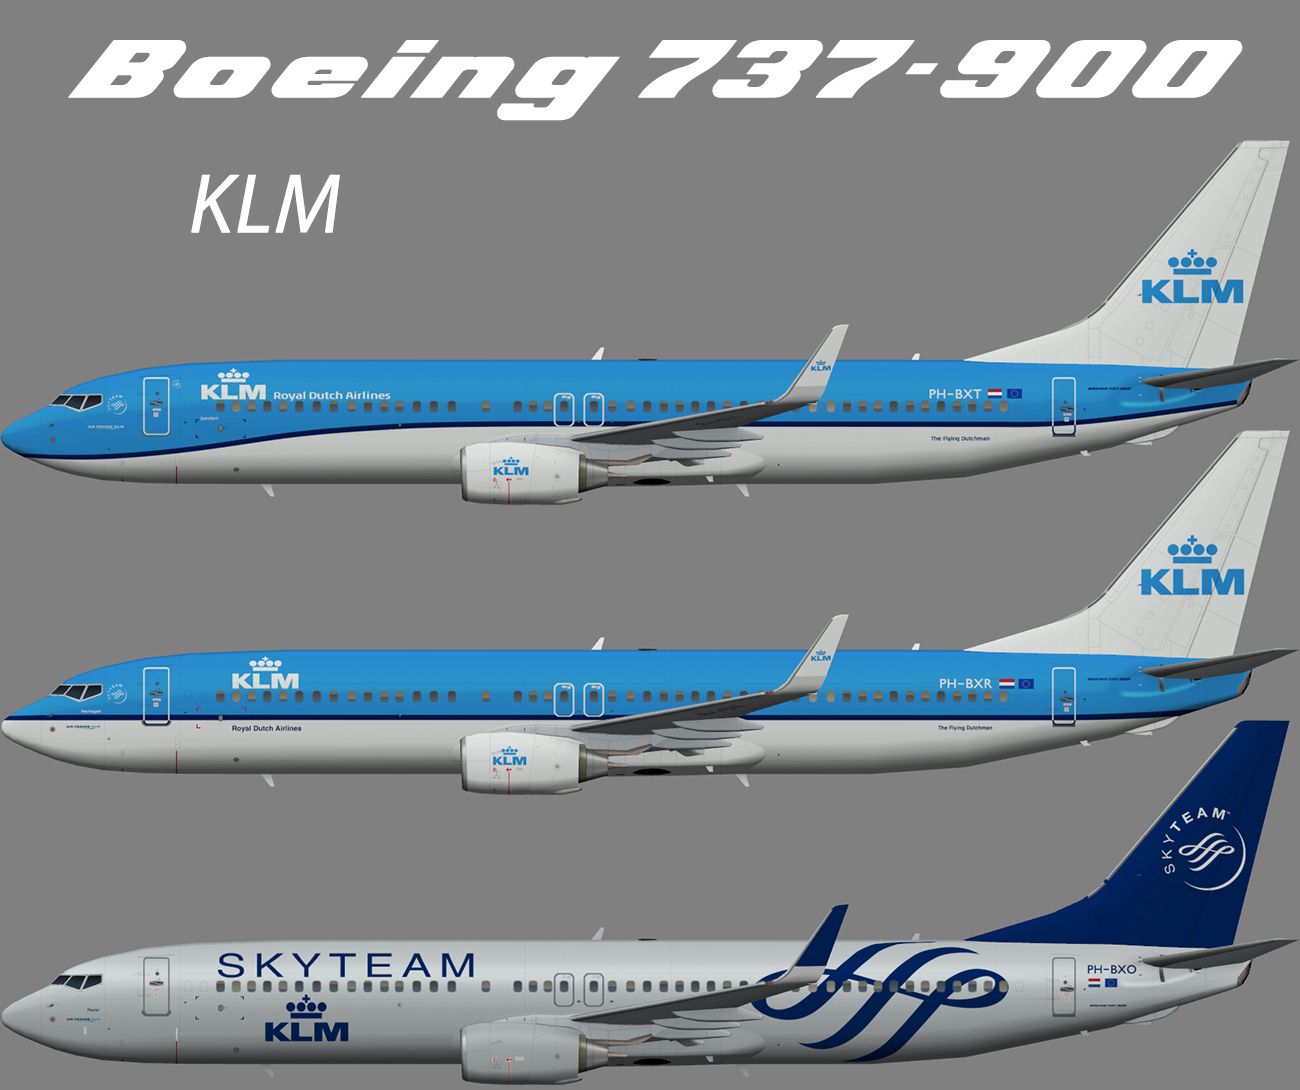 KLM Boeing 737-900 – Nils